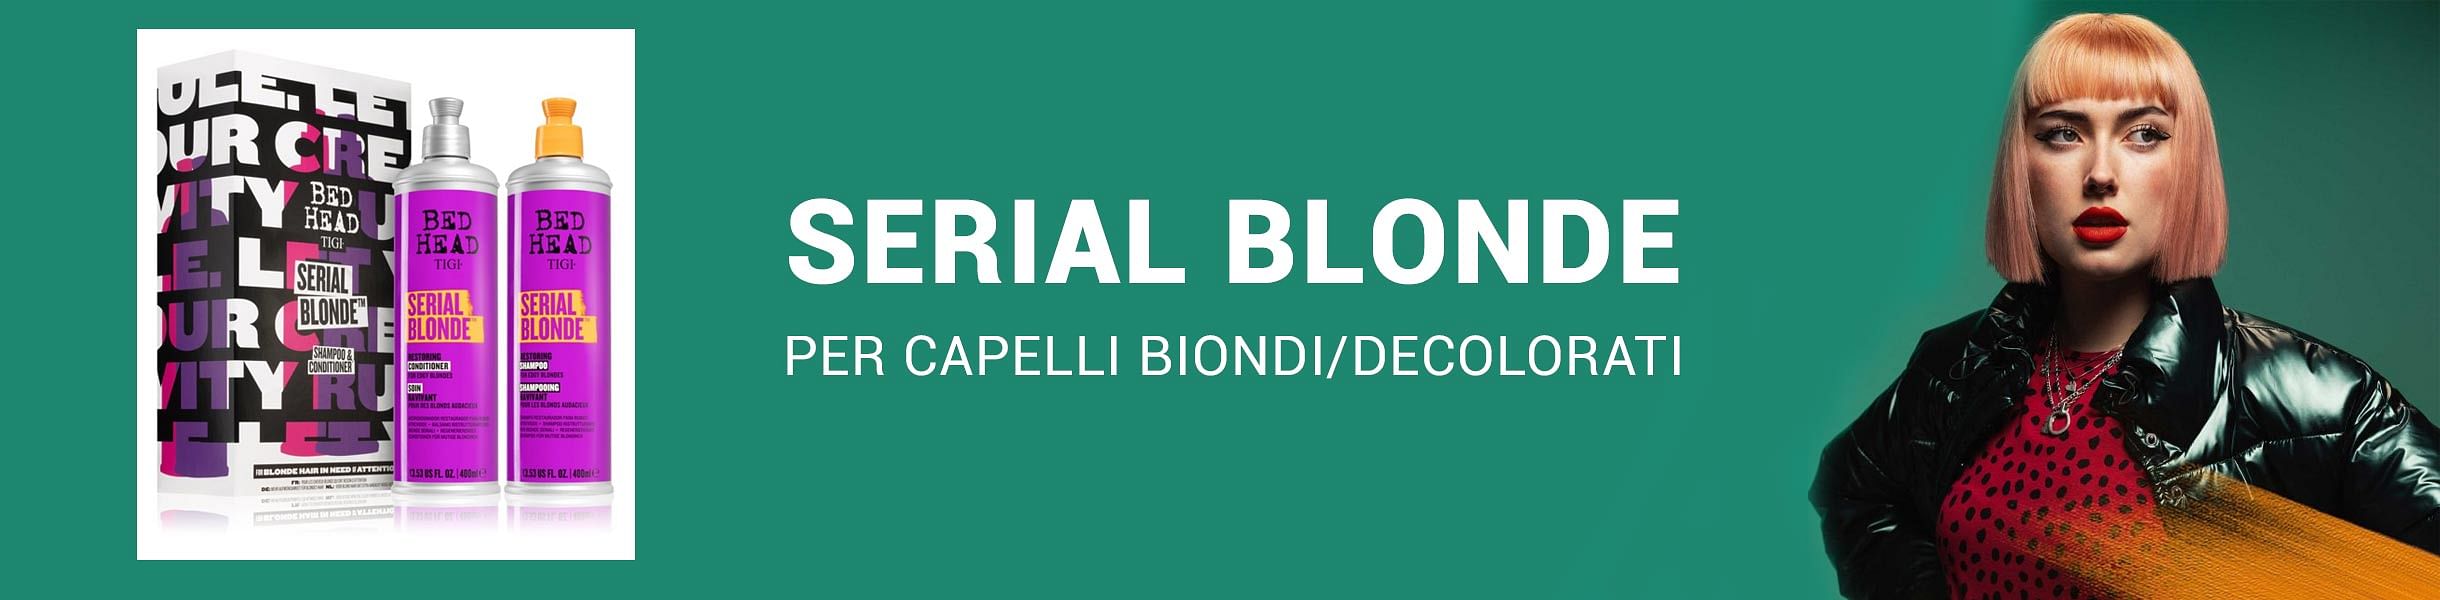 TIGI BED HEAD SERIAL BLONDE - CAPELLI BIONDI/GRIGI